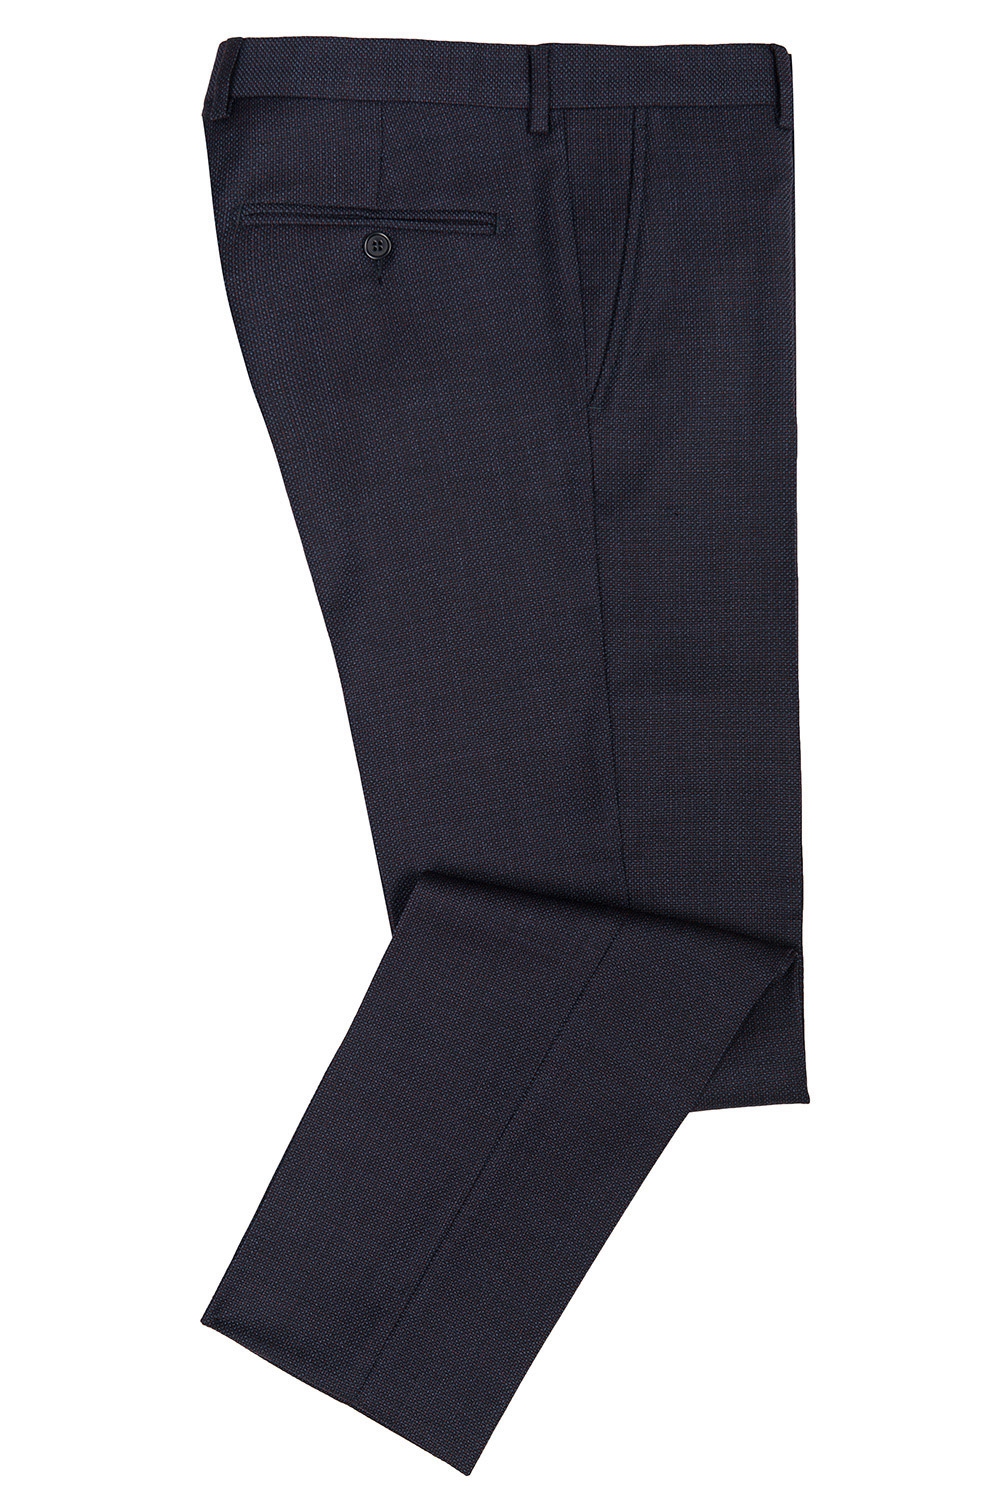 Pantaloni slim conti bleumarin print geometric 1